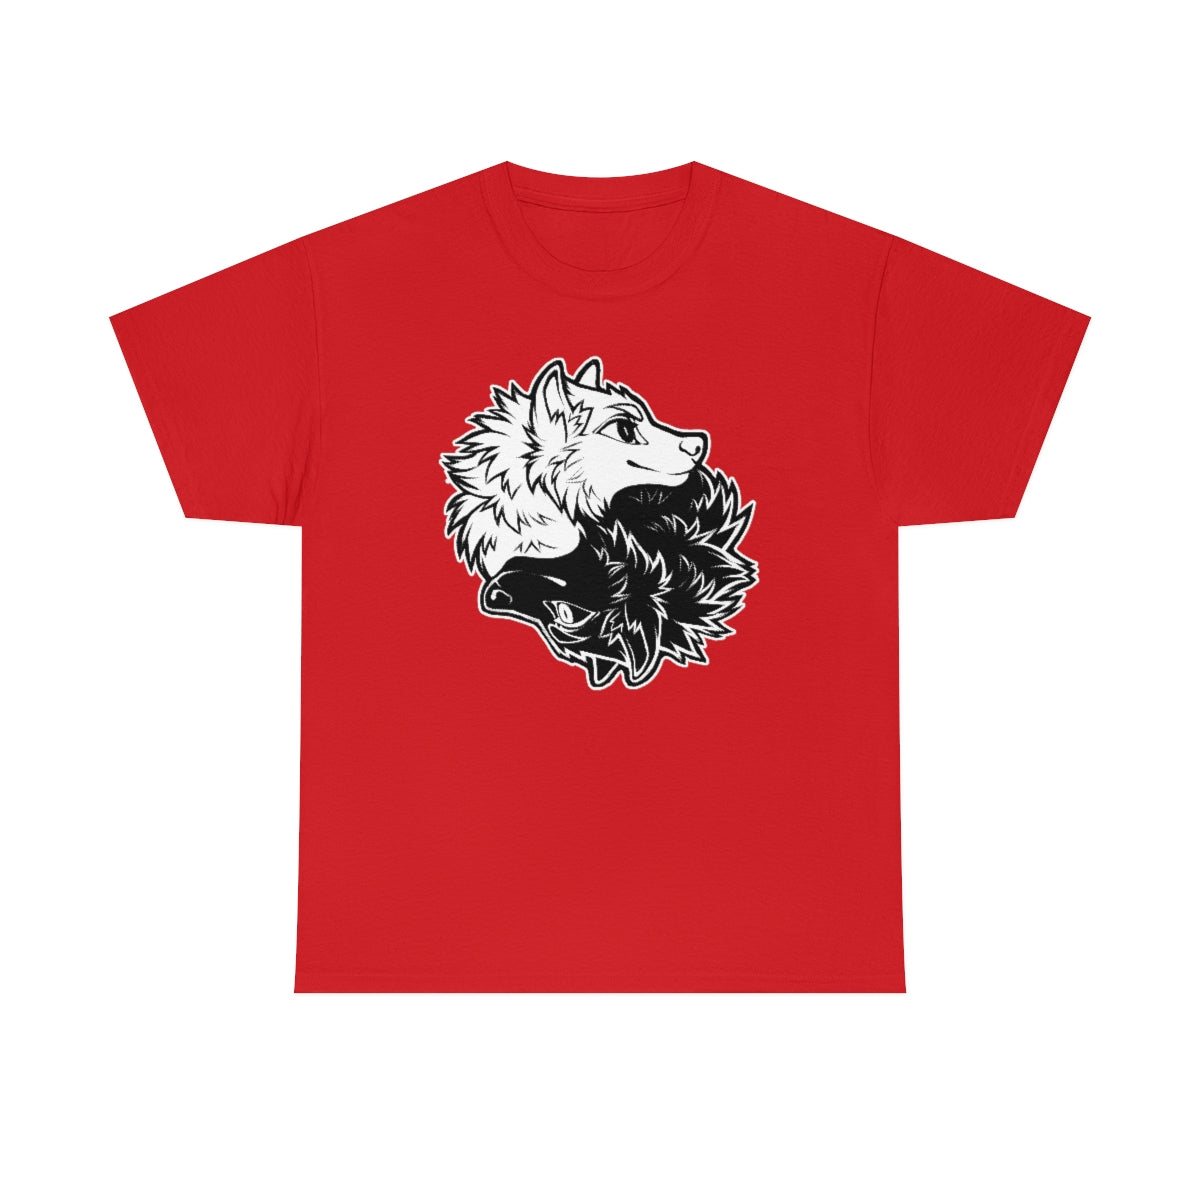 Ying Yang Wolves - T-Shirt T-Shirt Artworktee Red S 